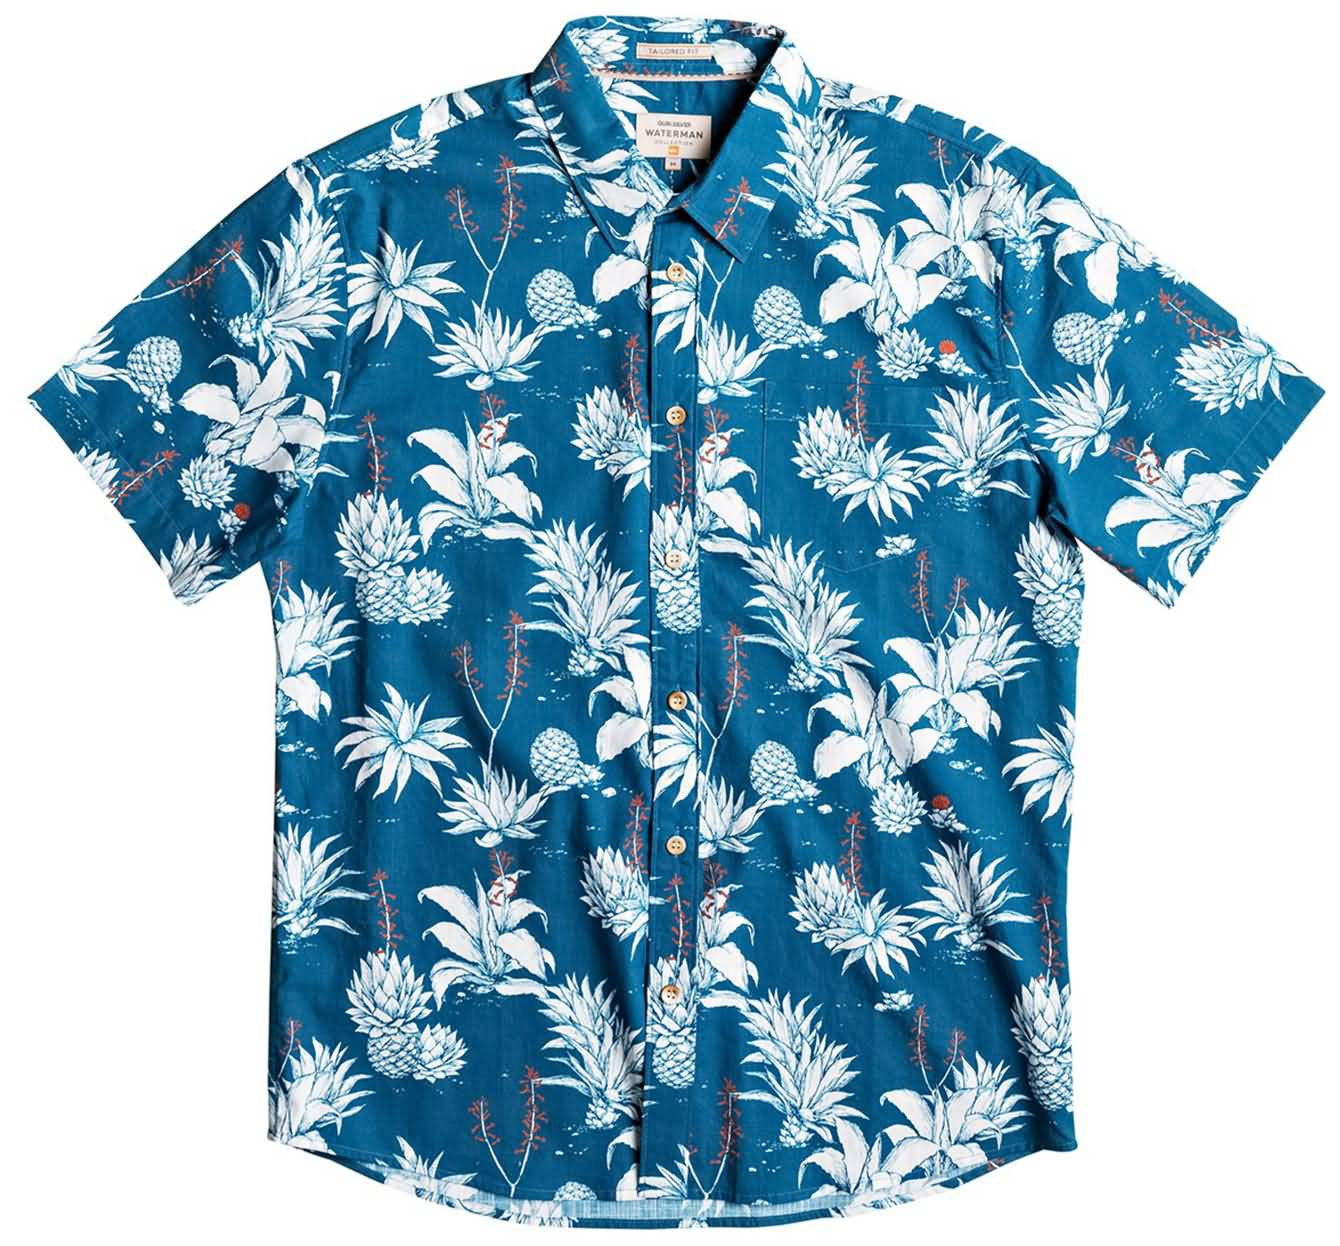 Quiksilver Waterman Fall 2017 Apparel | Beach Lifestyle Shirts